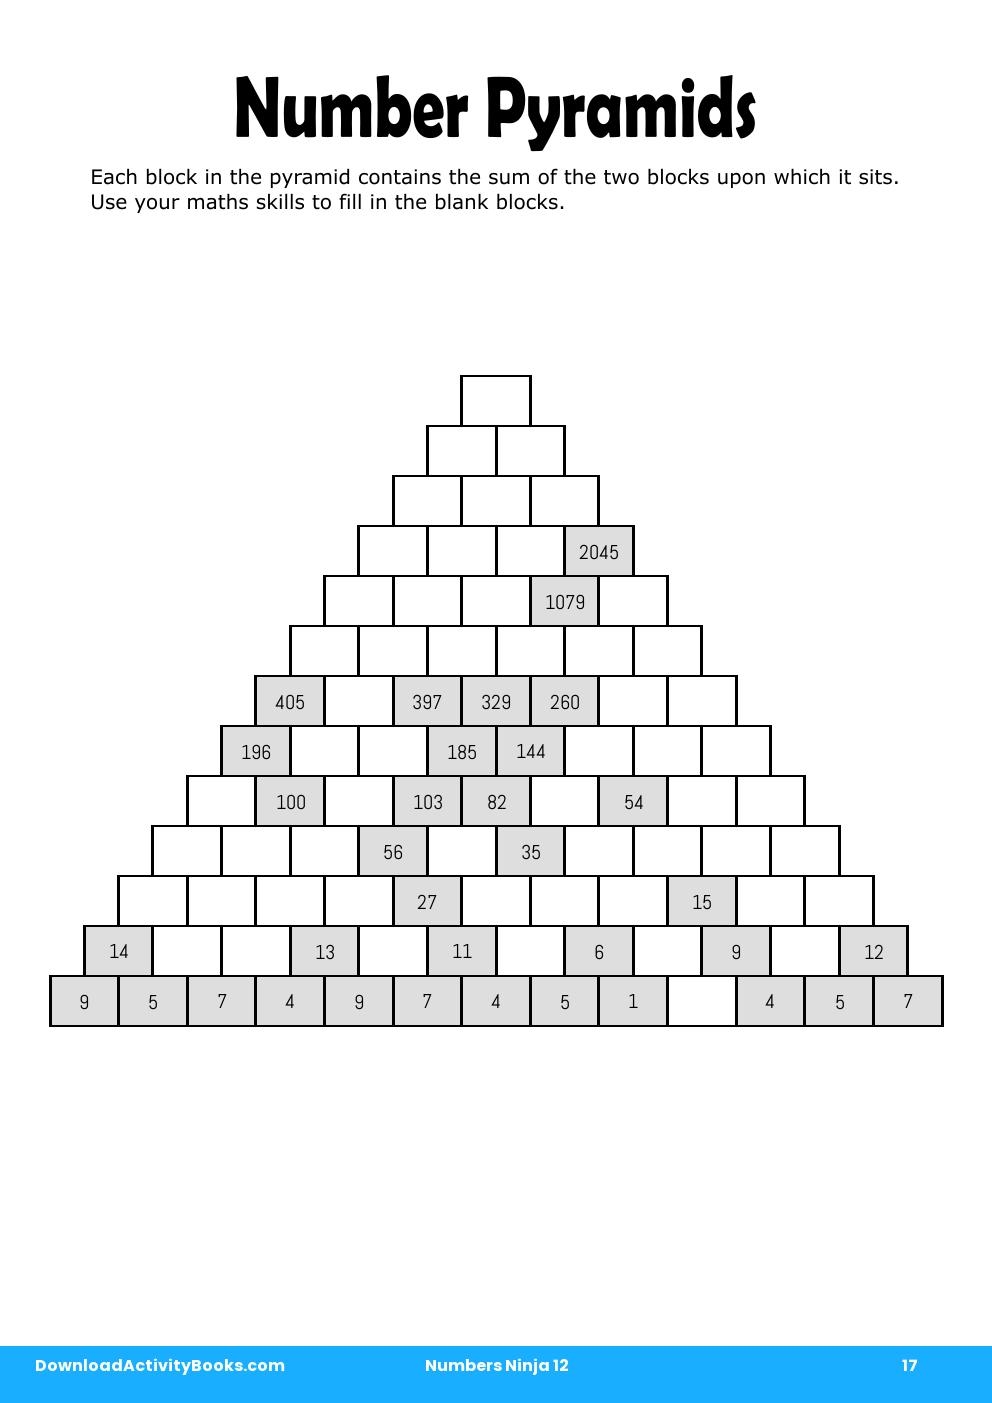 Number Pyramids in Numbers Ninja 12